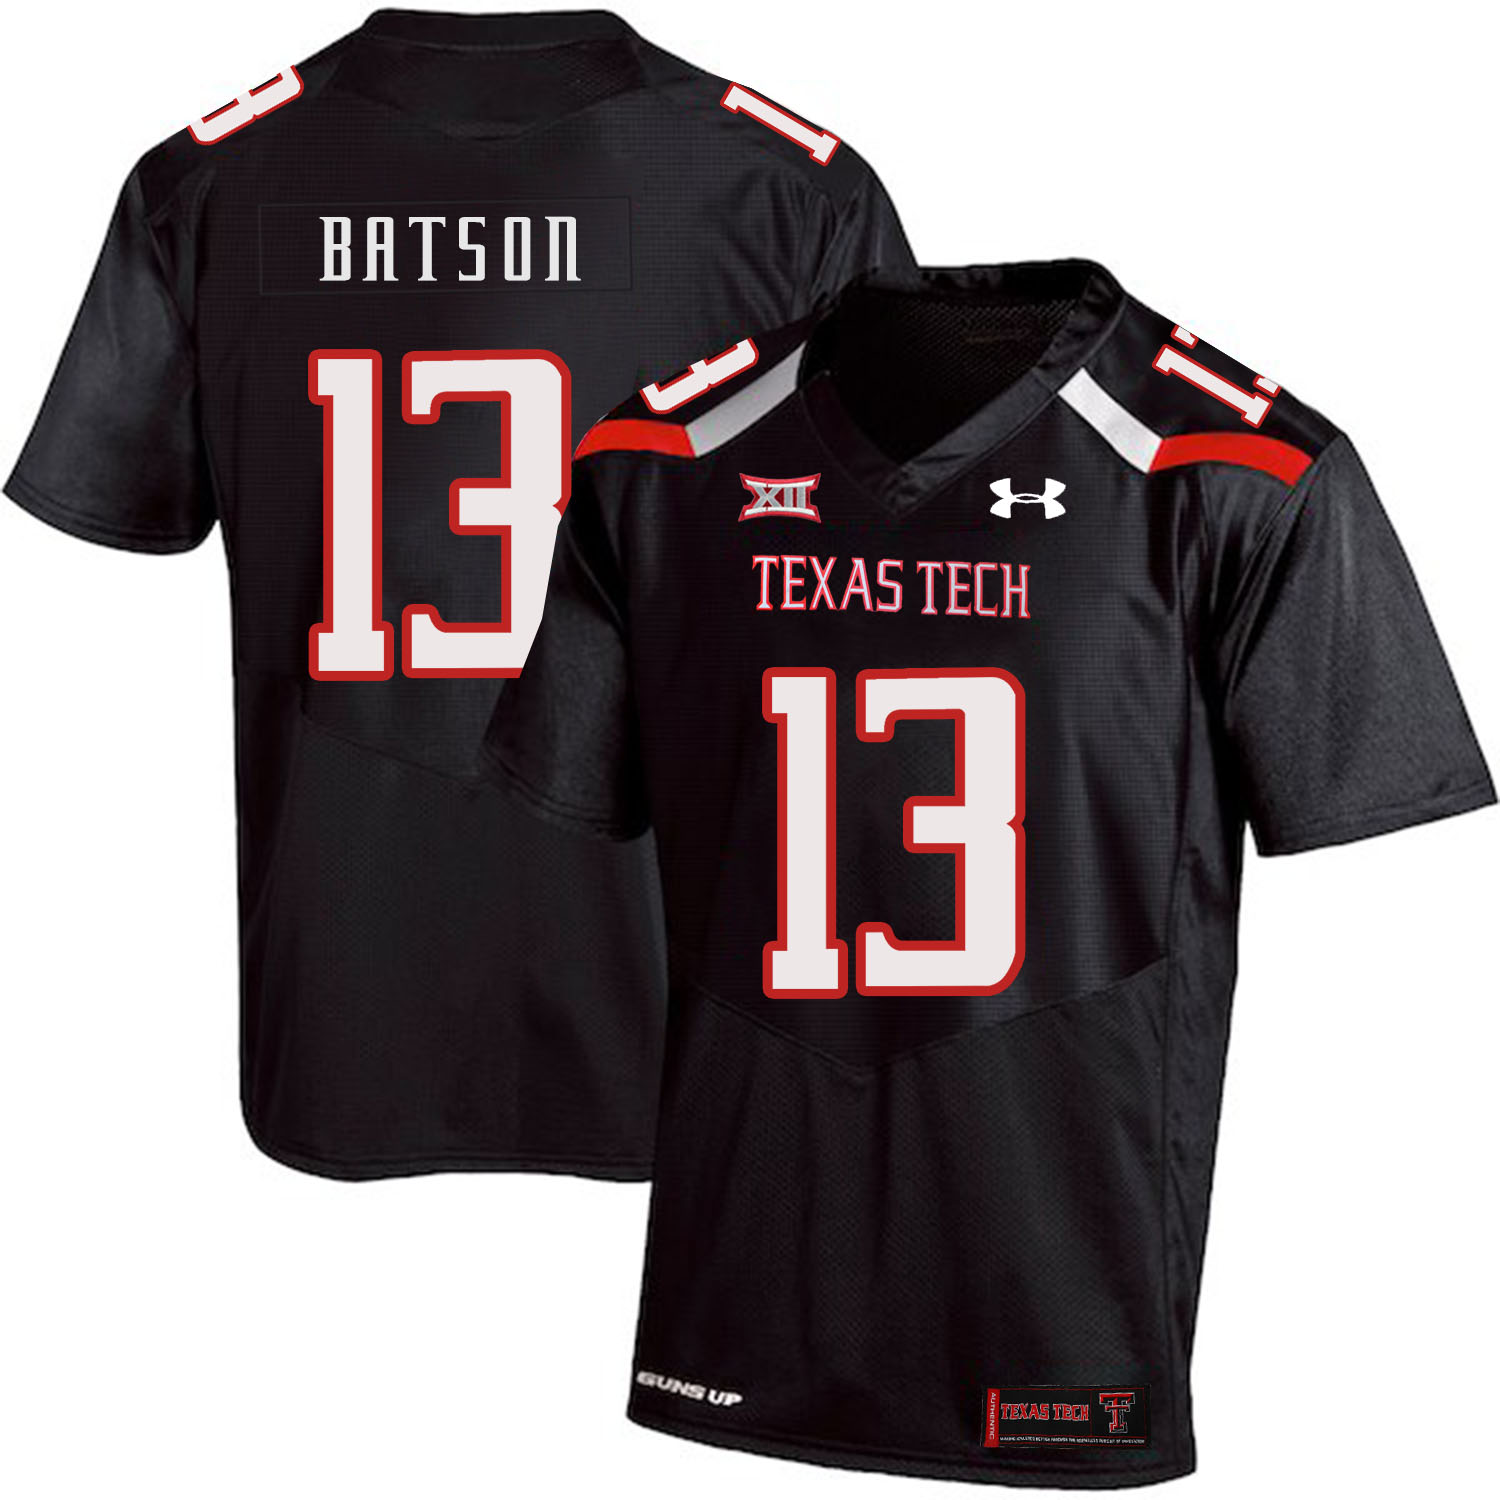 Texas Tech Red Raiders 13 Cameron Batson Black College Football Jersey